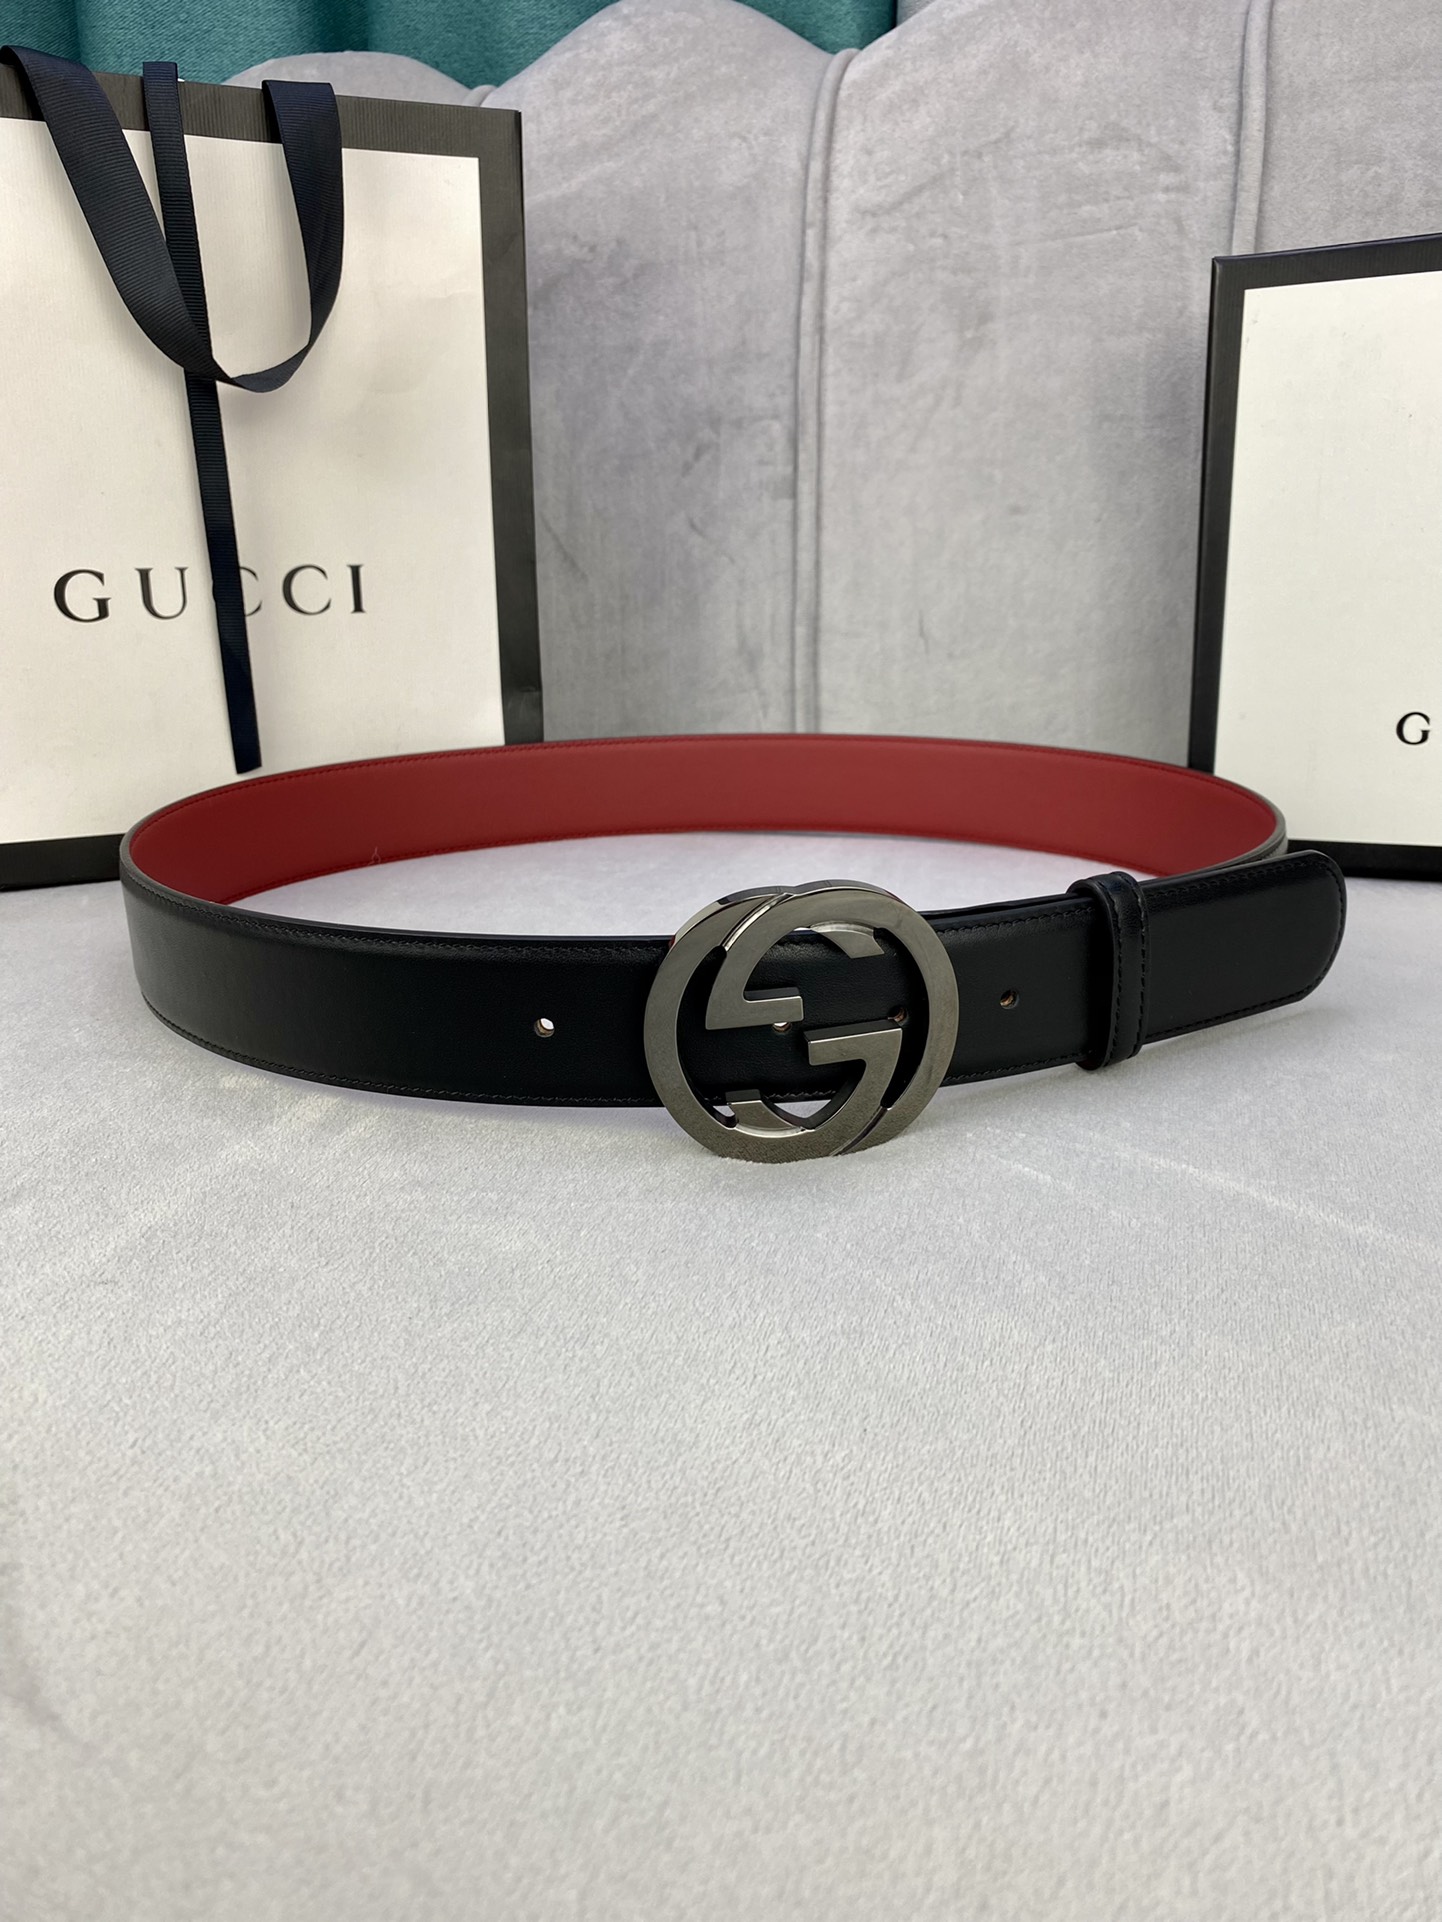 Pybdly 宽度4.0cm gucci 互扣式双G带扣，源自品牌现代风格典藏设计，经过重新诠释而别具新意。呈现于纤细的皮革腰带之上。